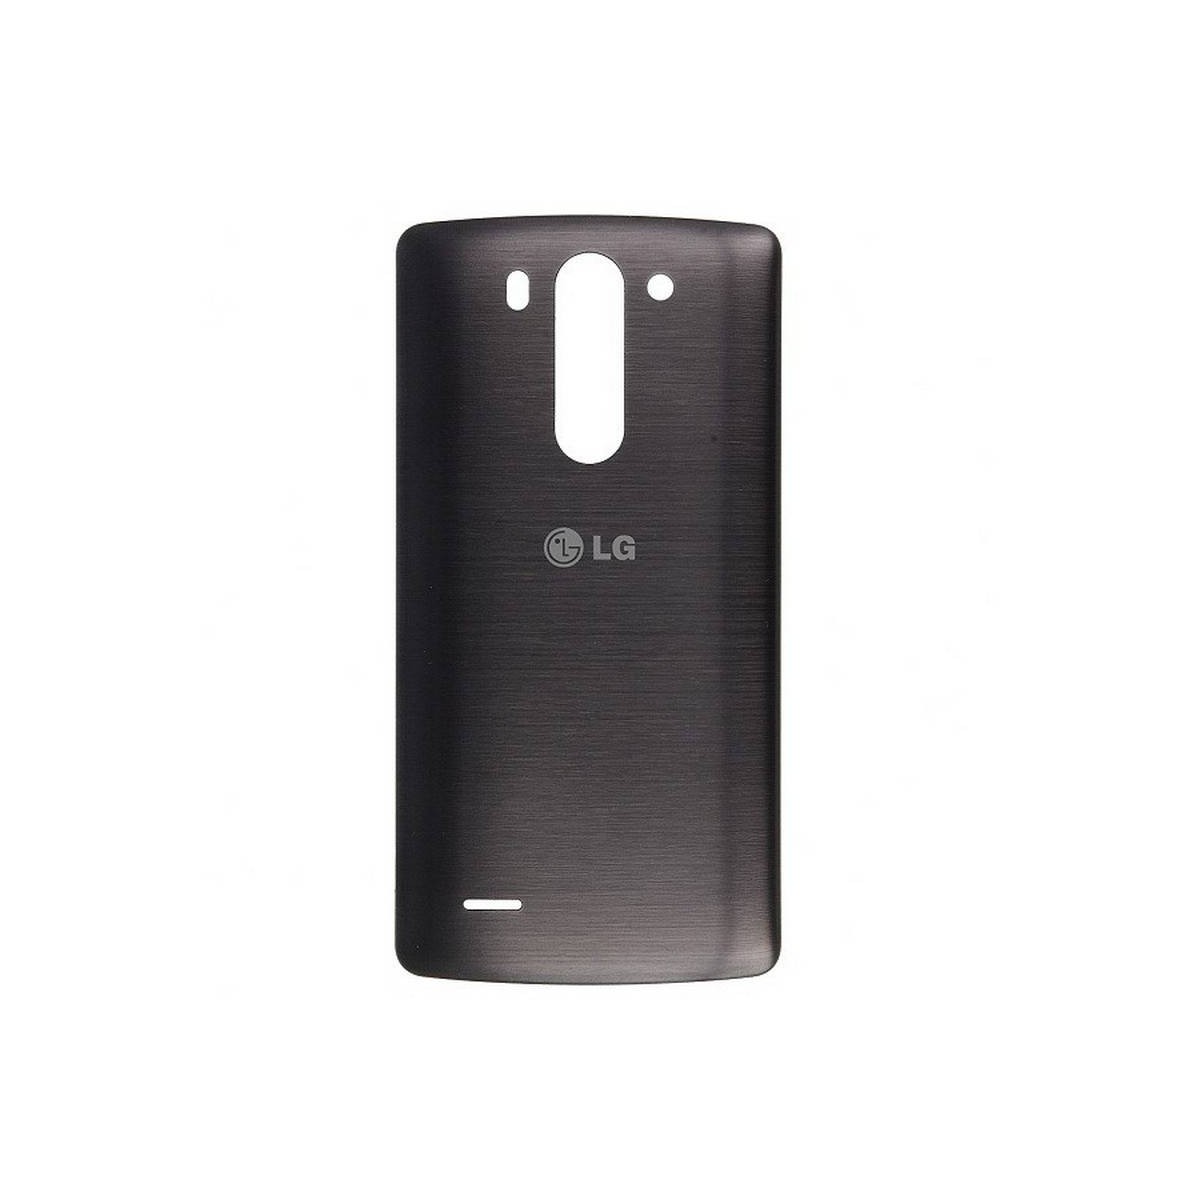 Posicionamiento en buscadores Soplar máscara ✓ Tapa trasera LG G3 mini D722 Negra. Comprar ahora